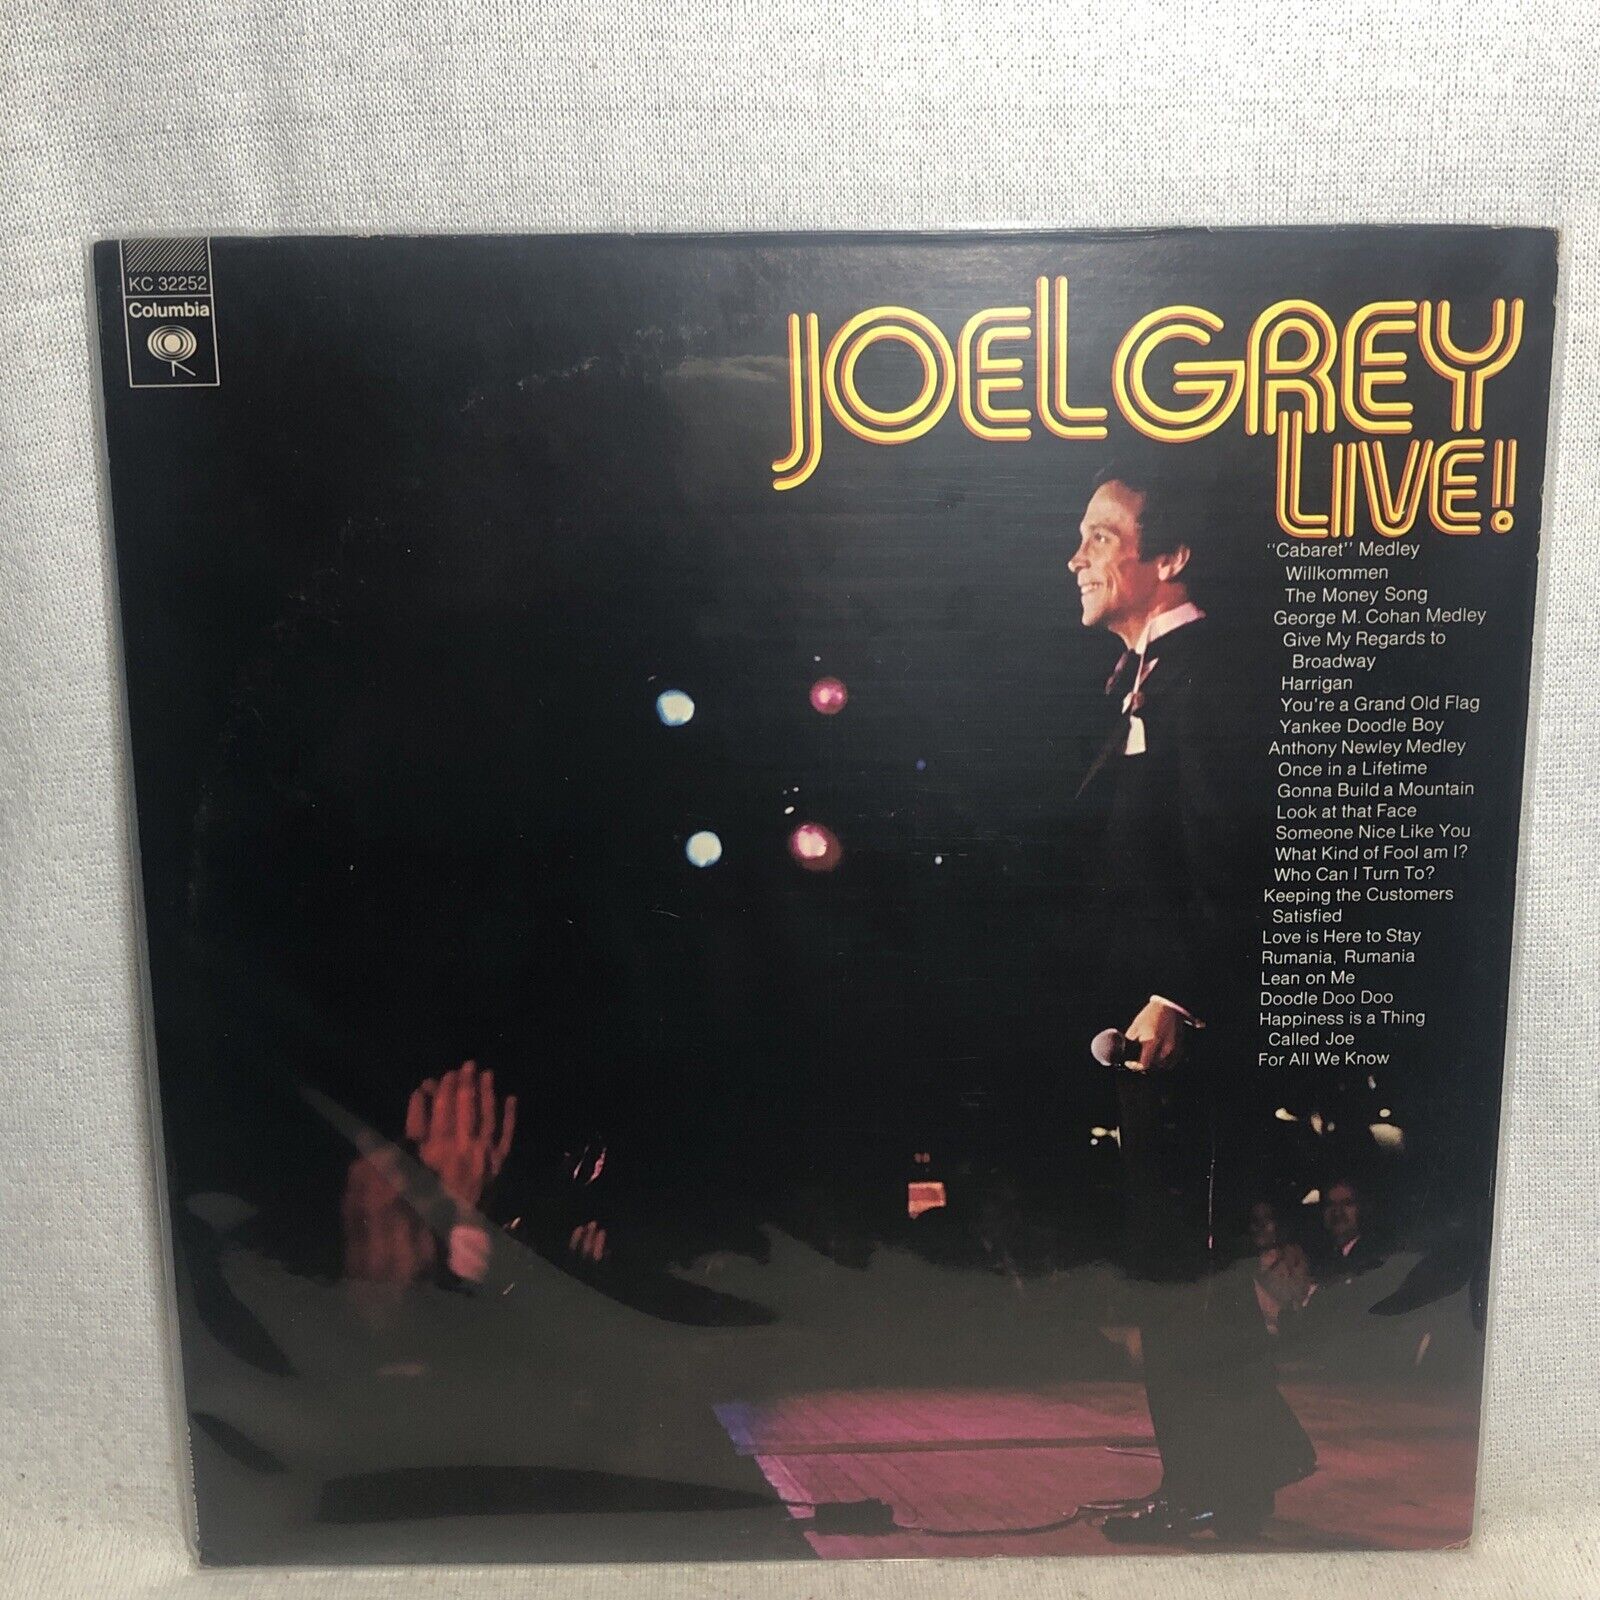 JOEL GREY LIVE! 12” Vinyl LP CBS Columbia